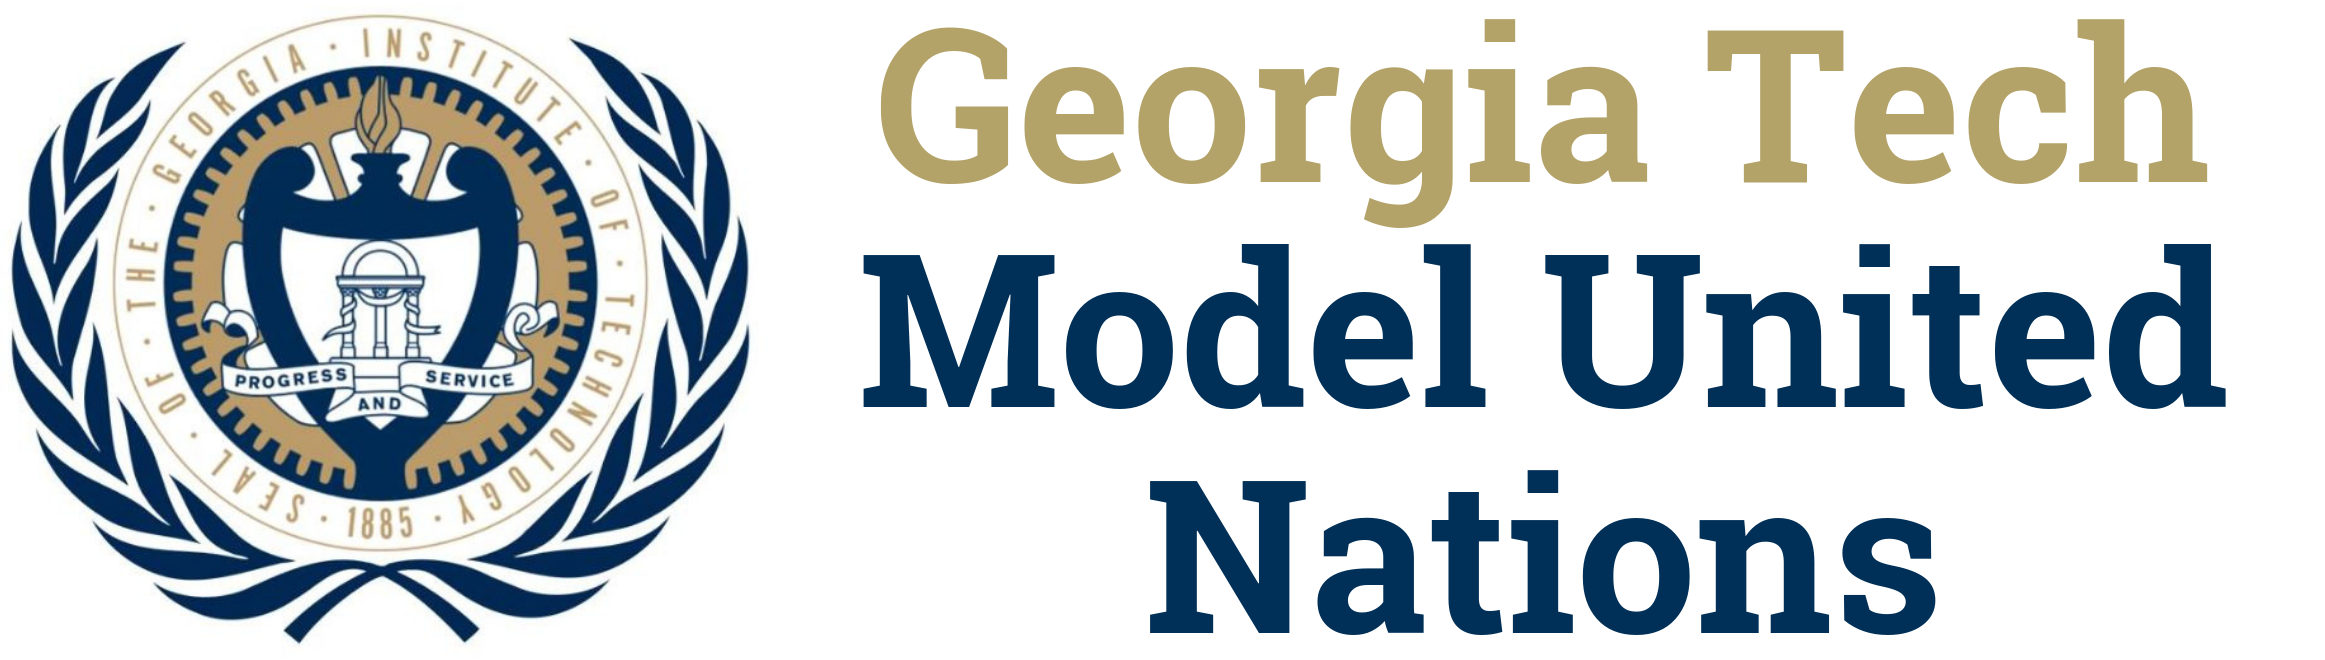 Georgia Tech Model United Nations Program